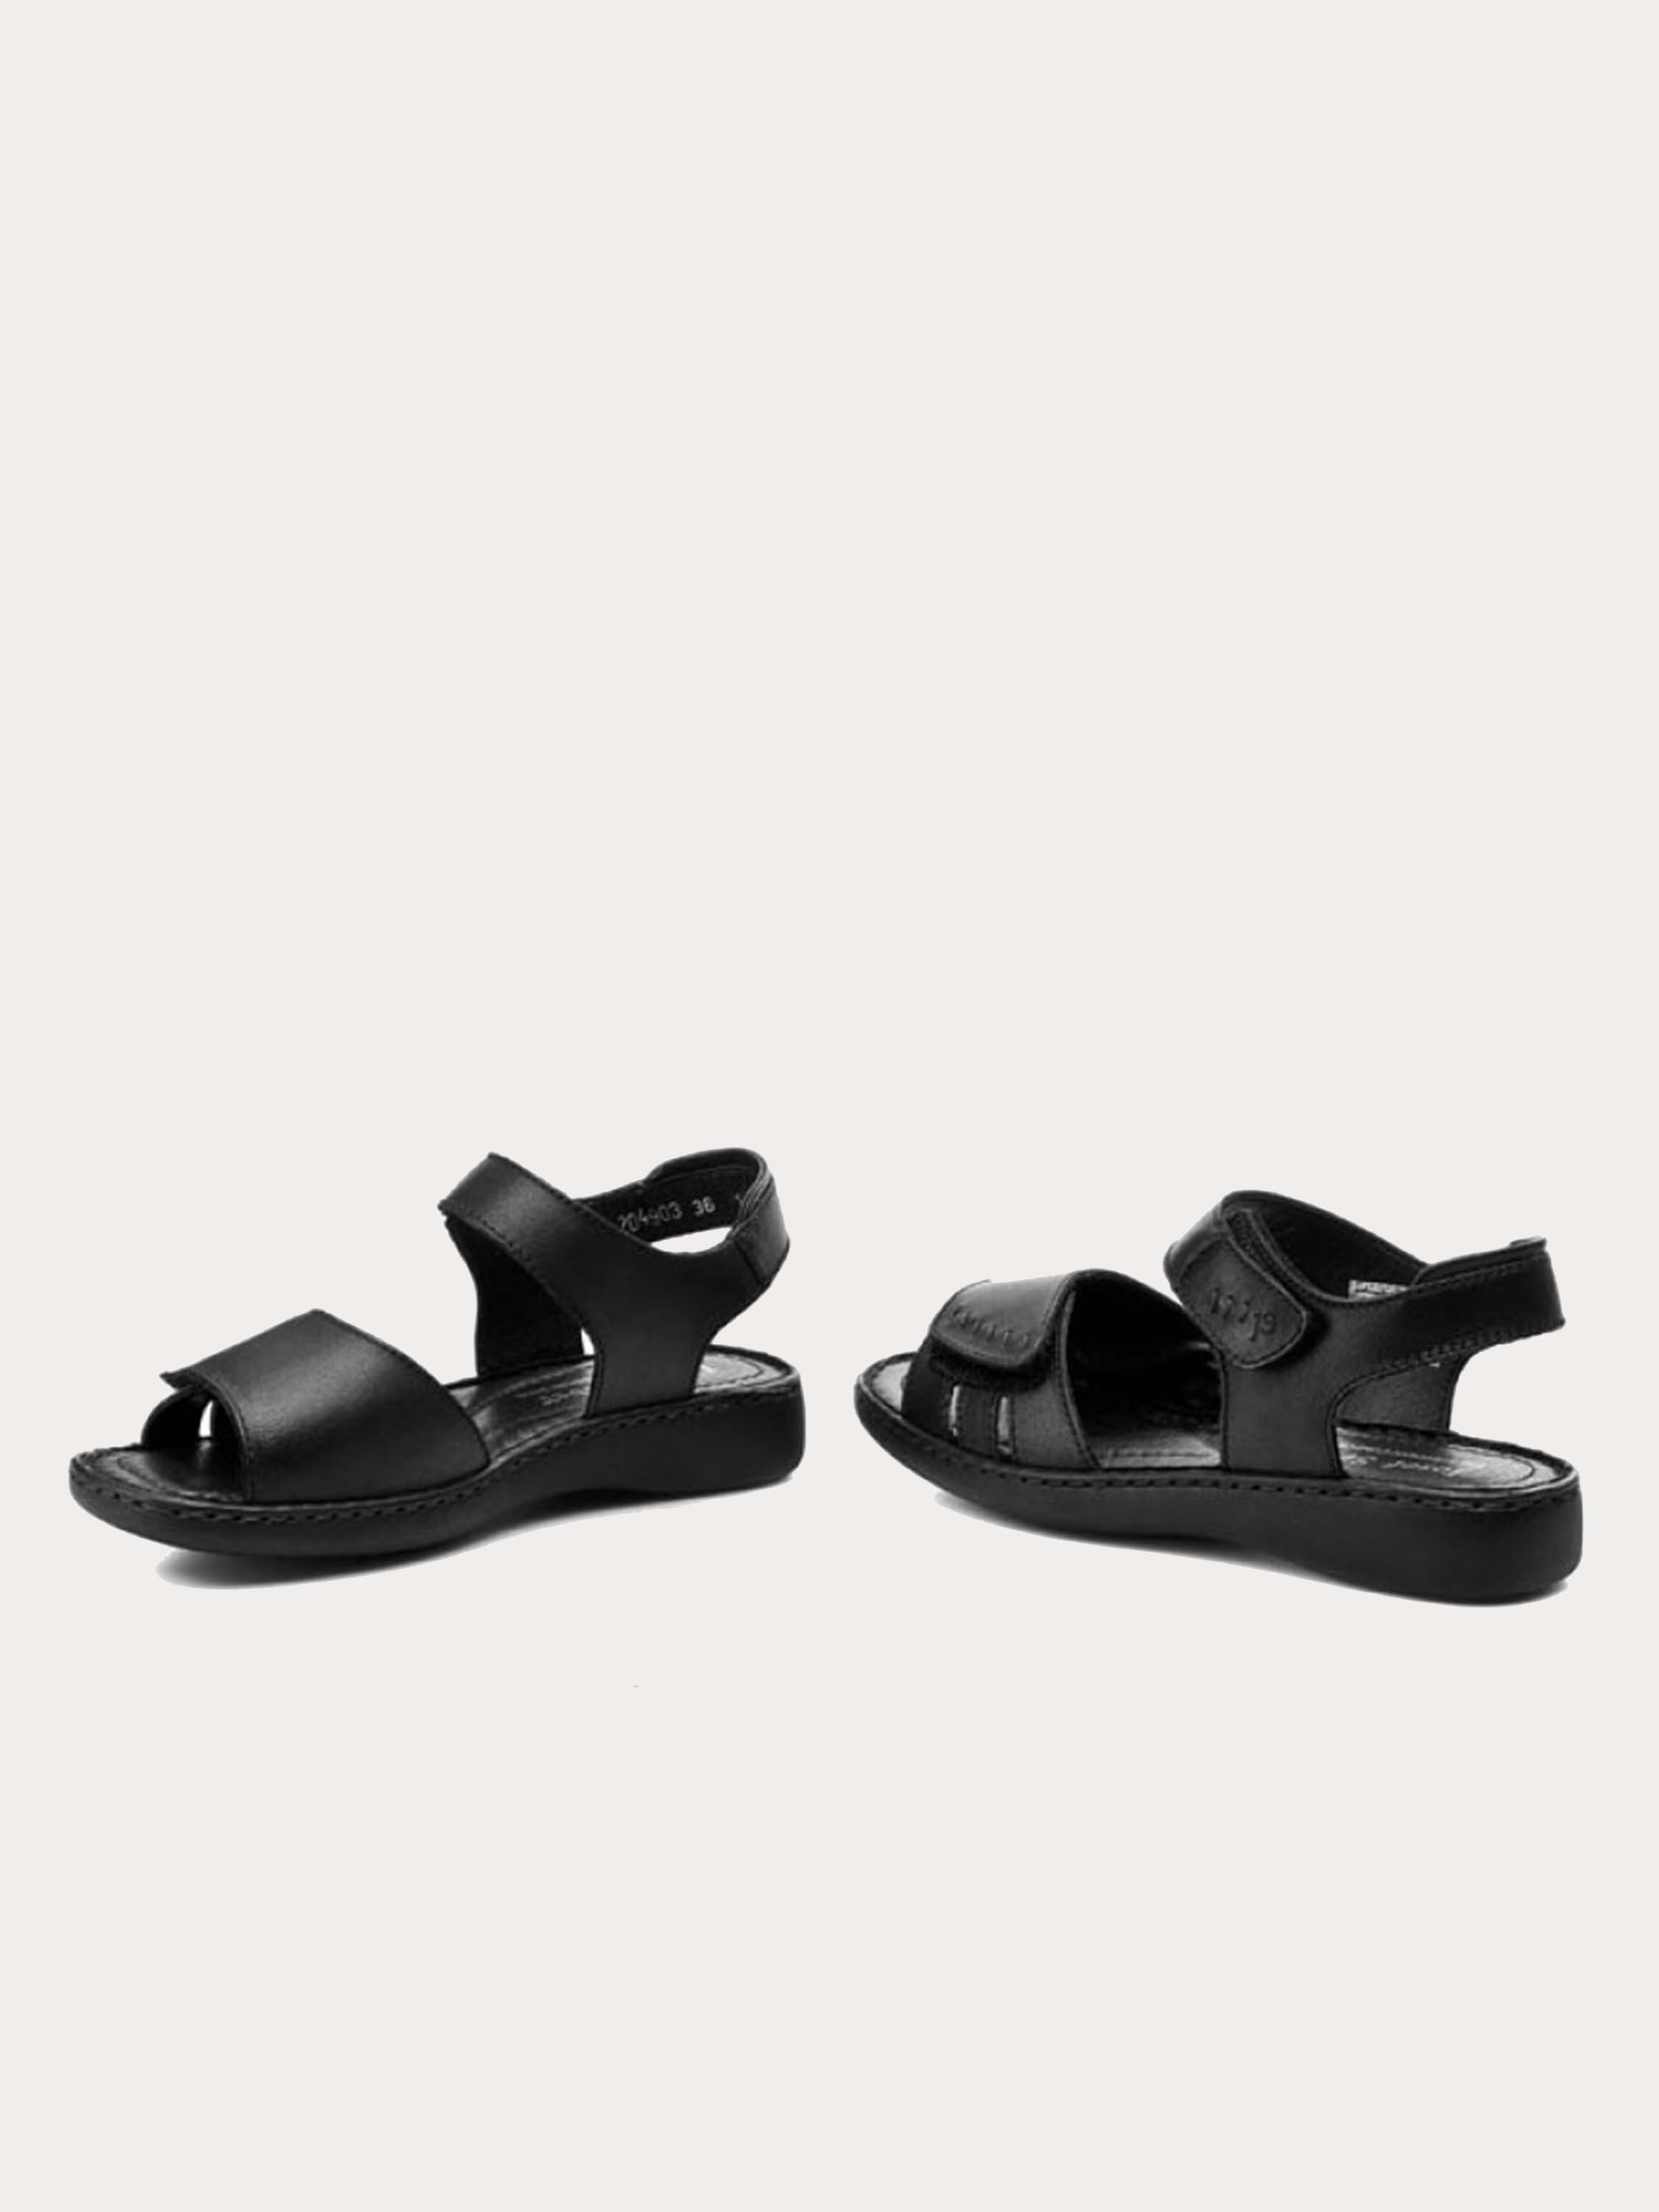 Josef Seibel Lisa 01 Women's Sandals #color_Black